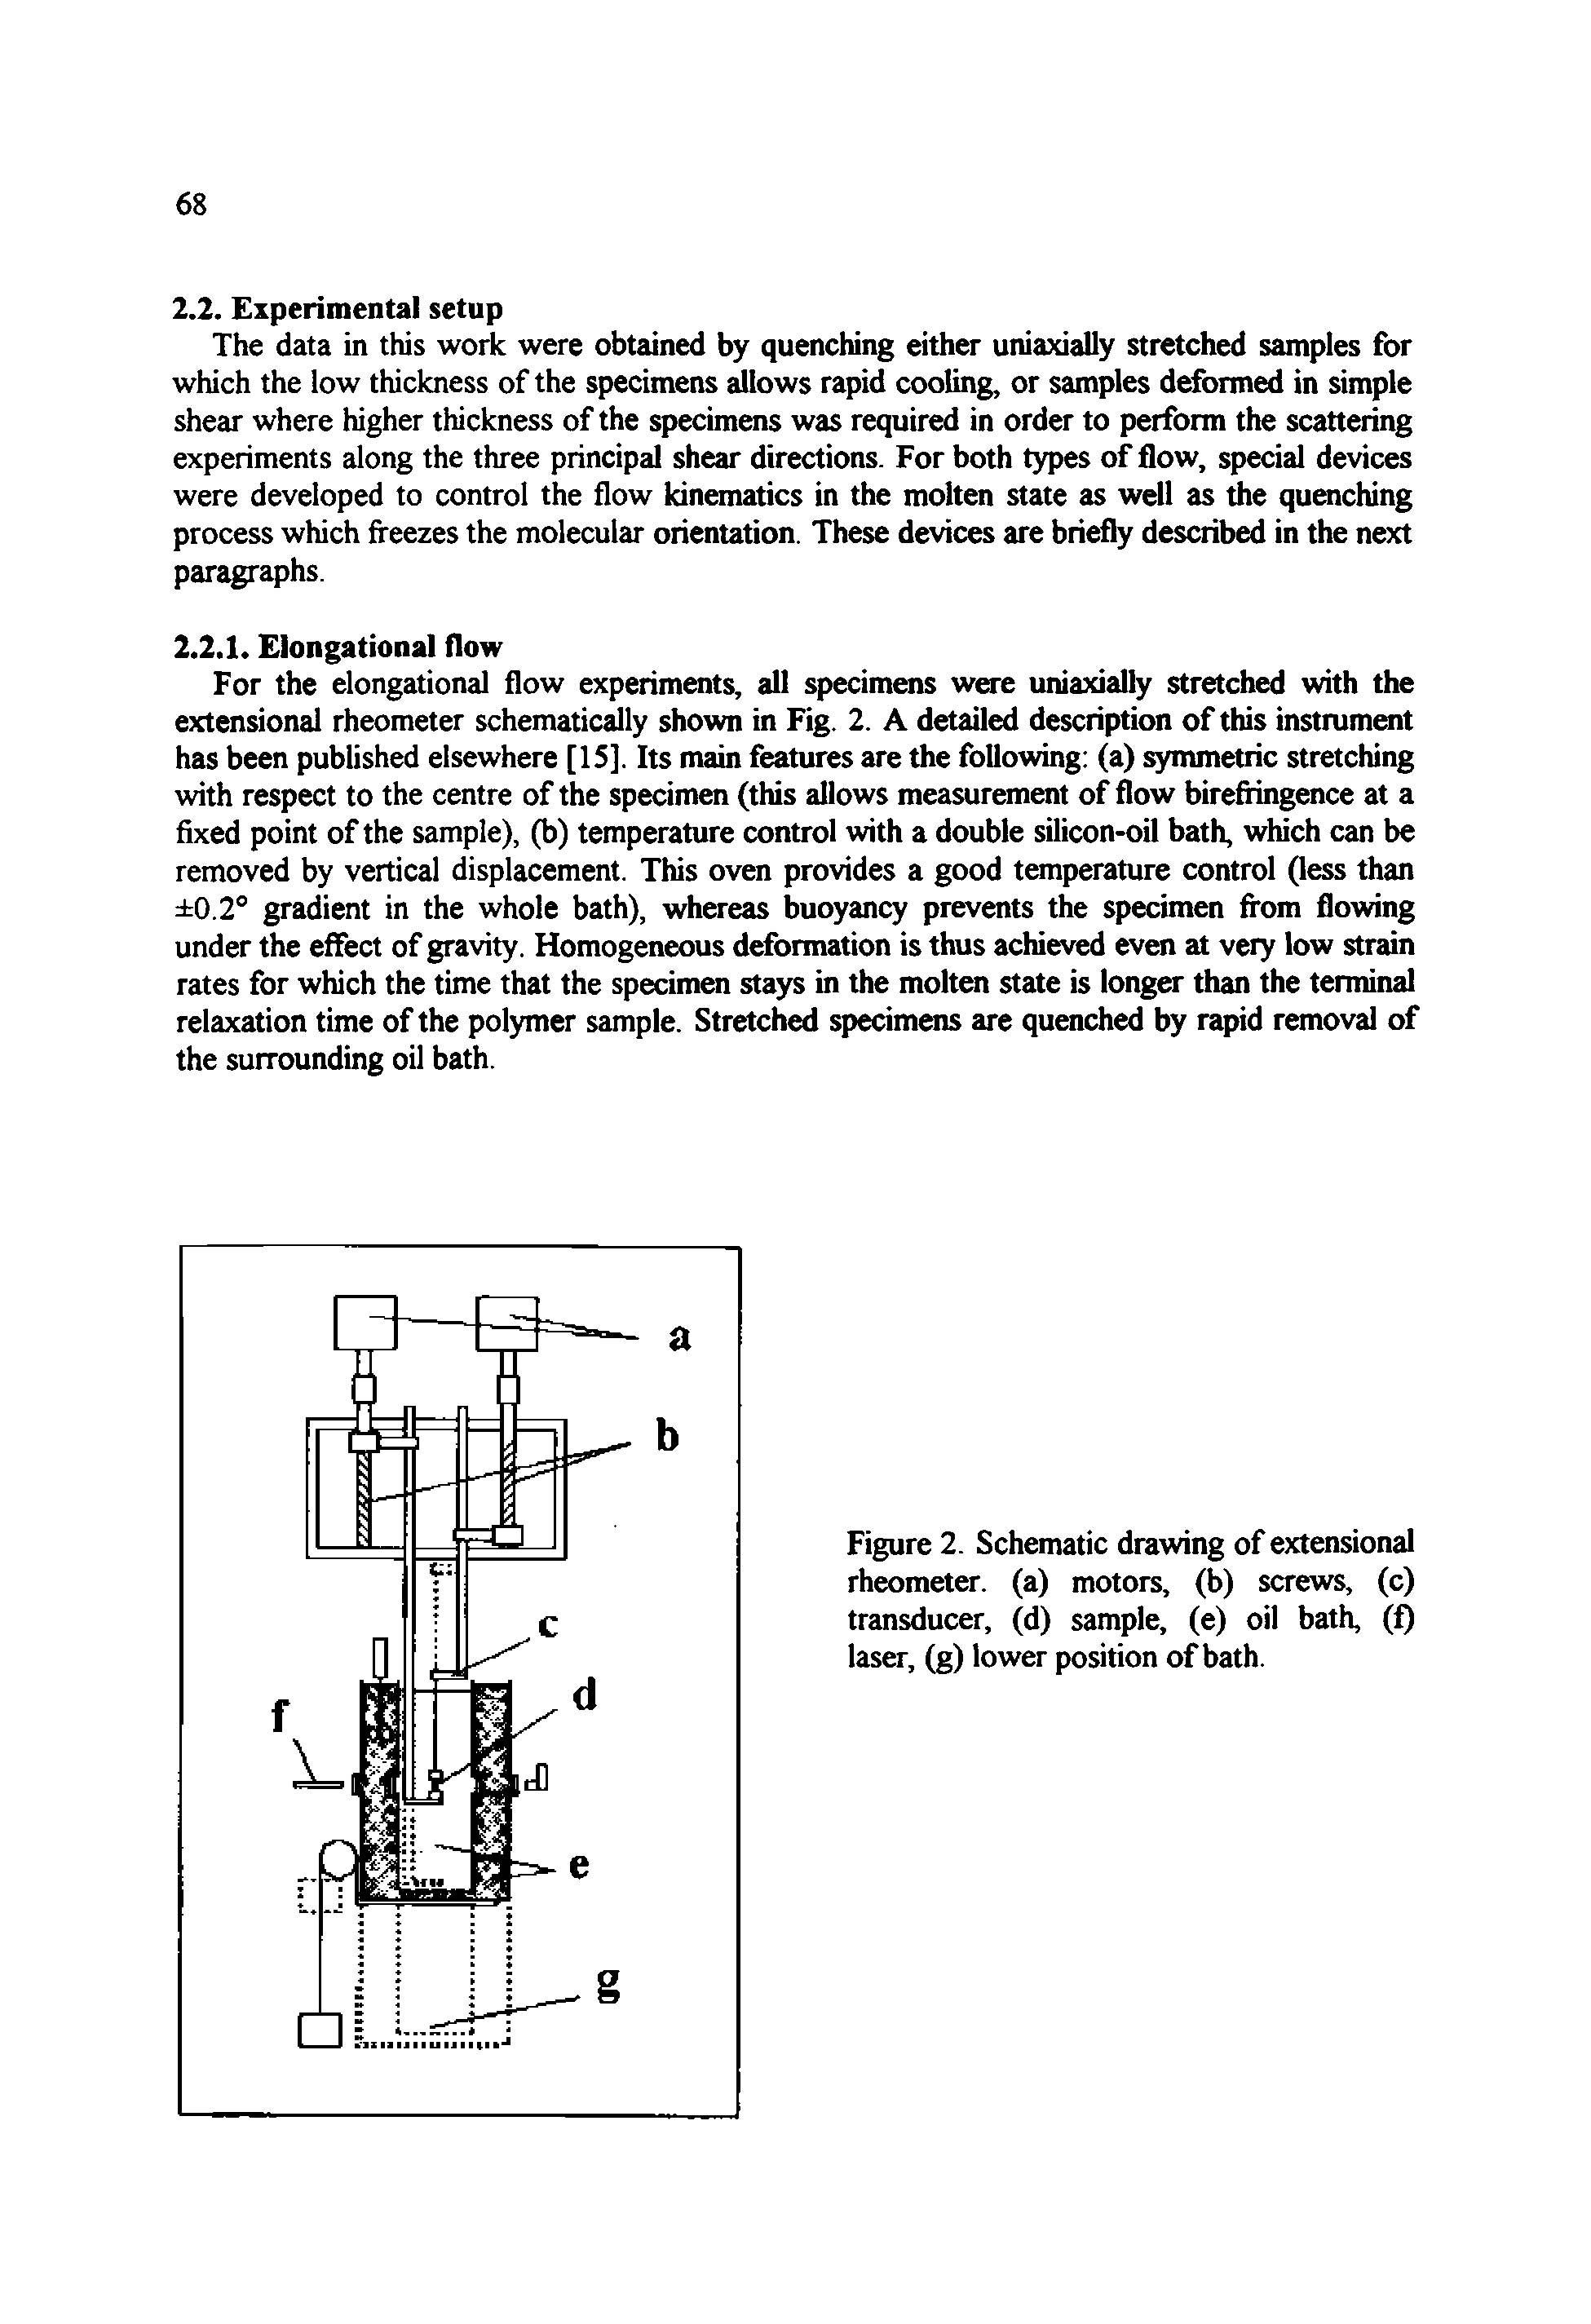 Figure 2. Schematic drawing of extensional rheometer, (a) motors, (b) screws, (c) transducer, (d) sample, (e) oil bath, (f) laser, (g) lower position of bath.